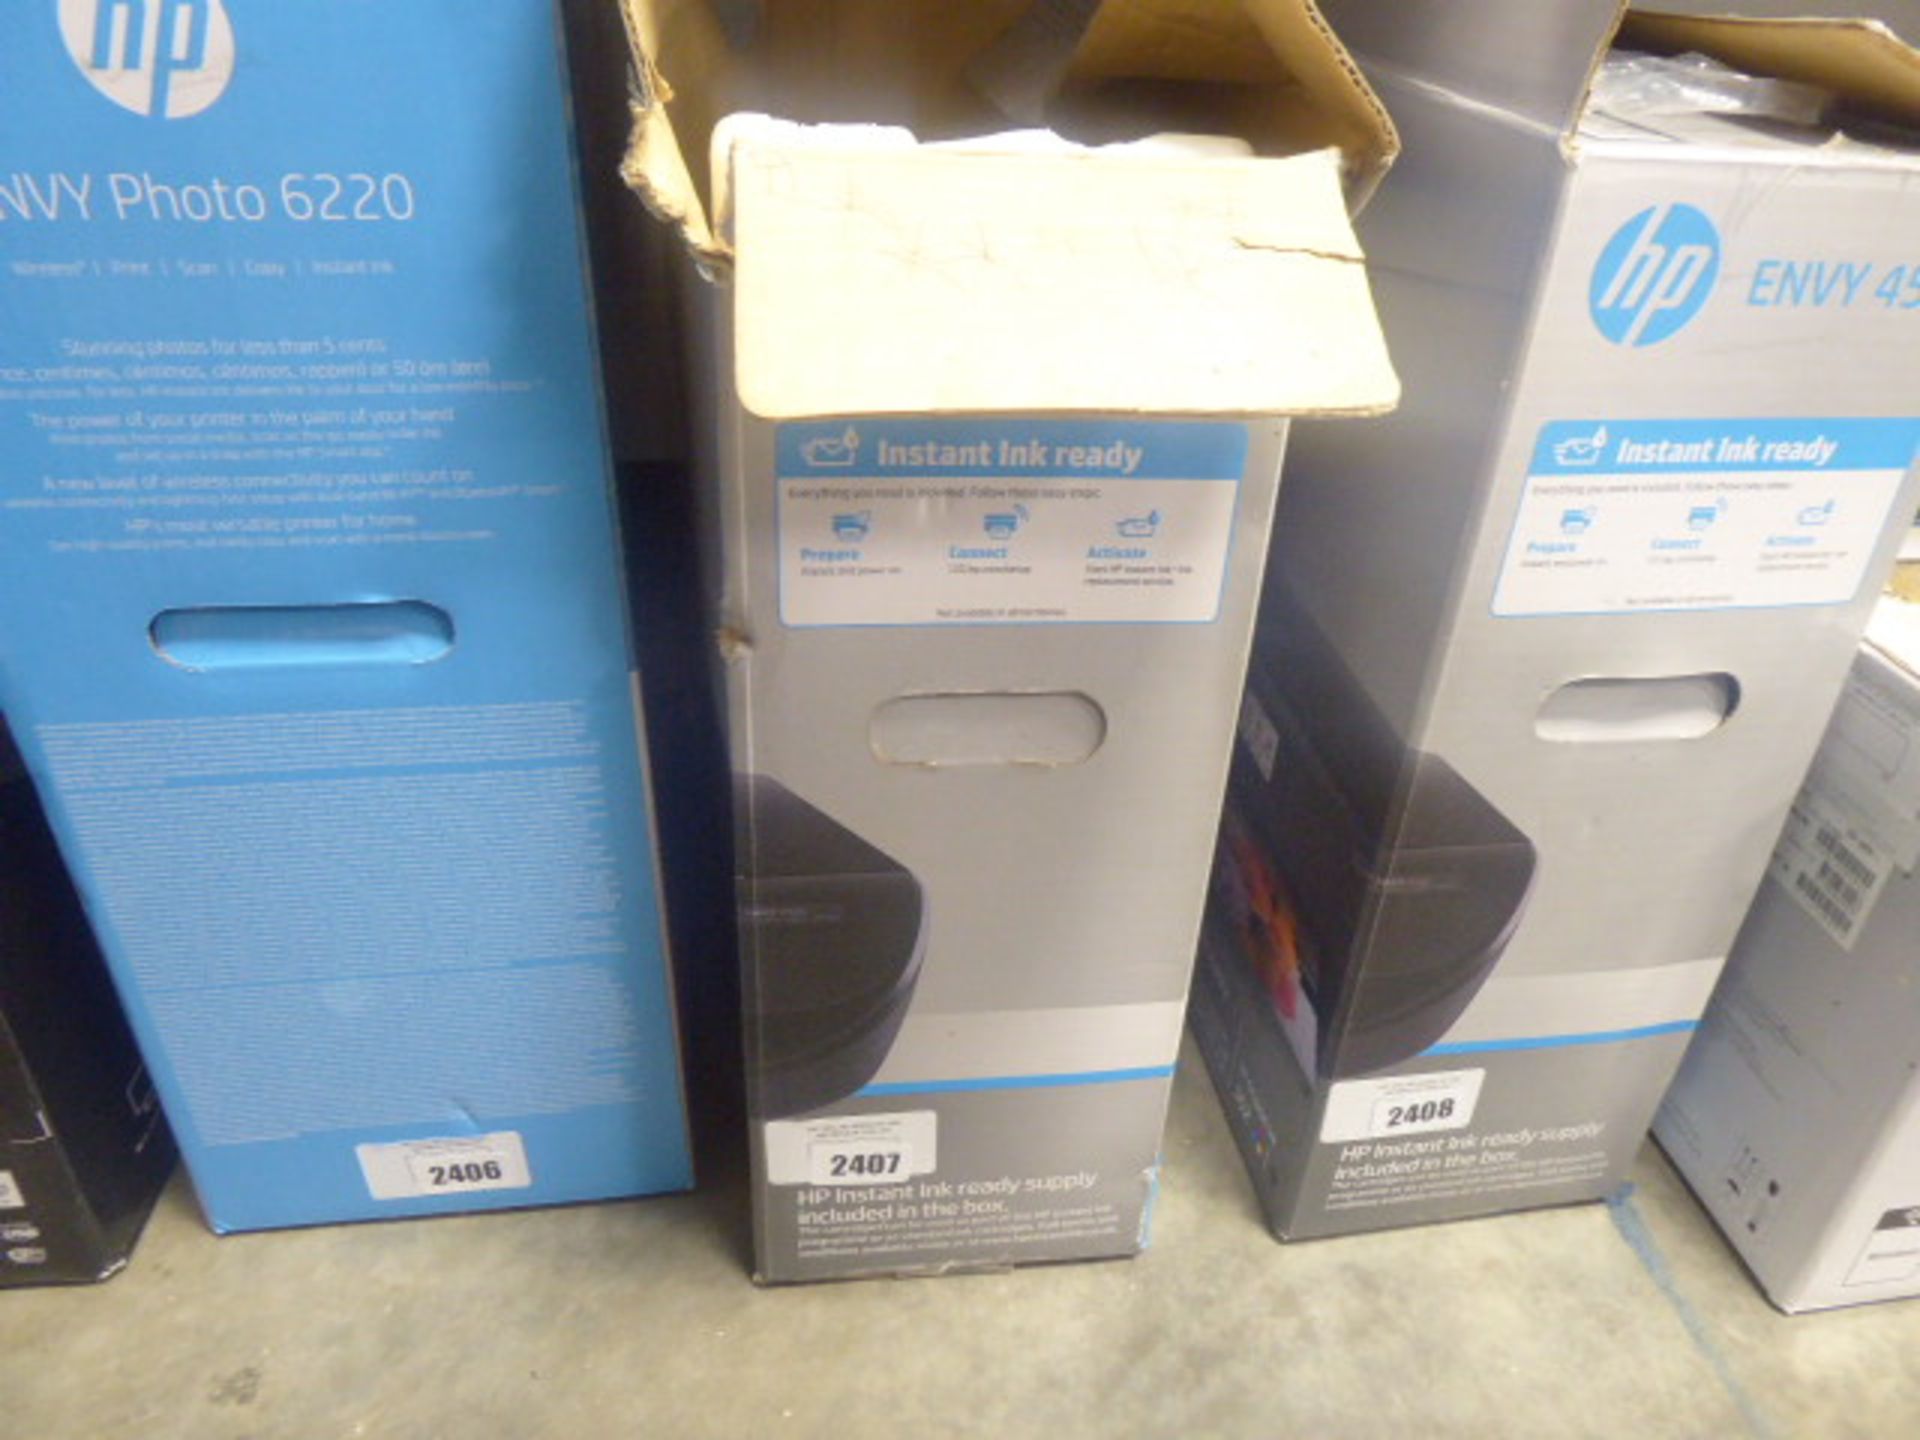 HP Envy 4520 printer with box